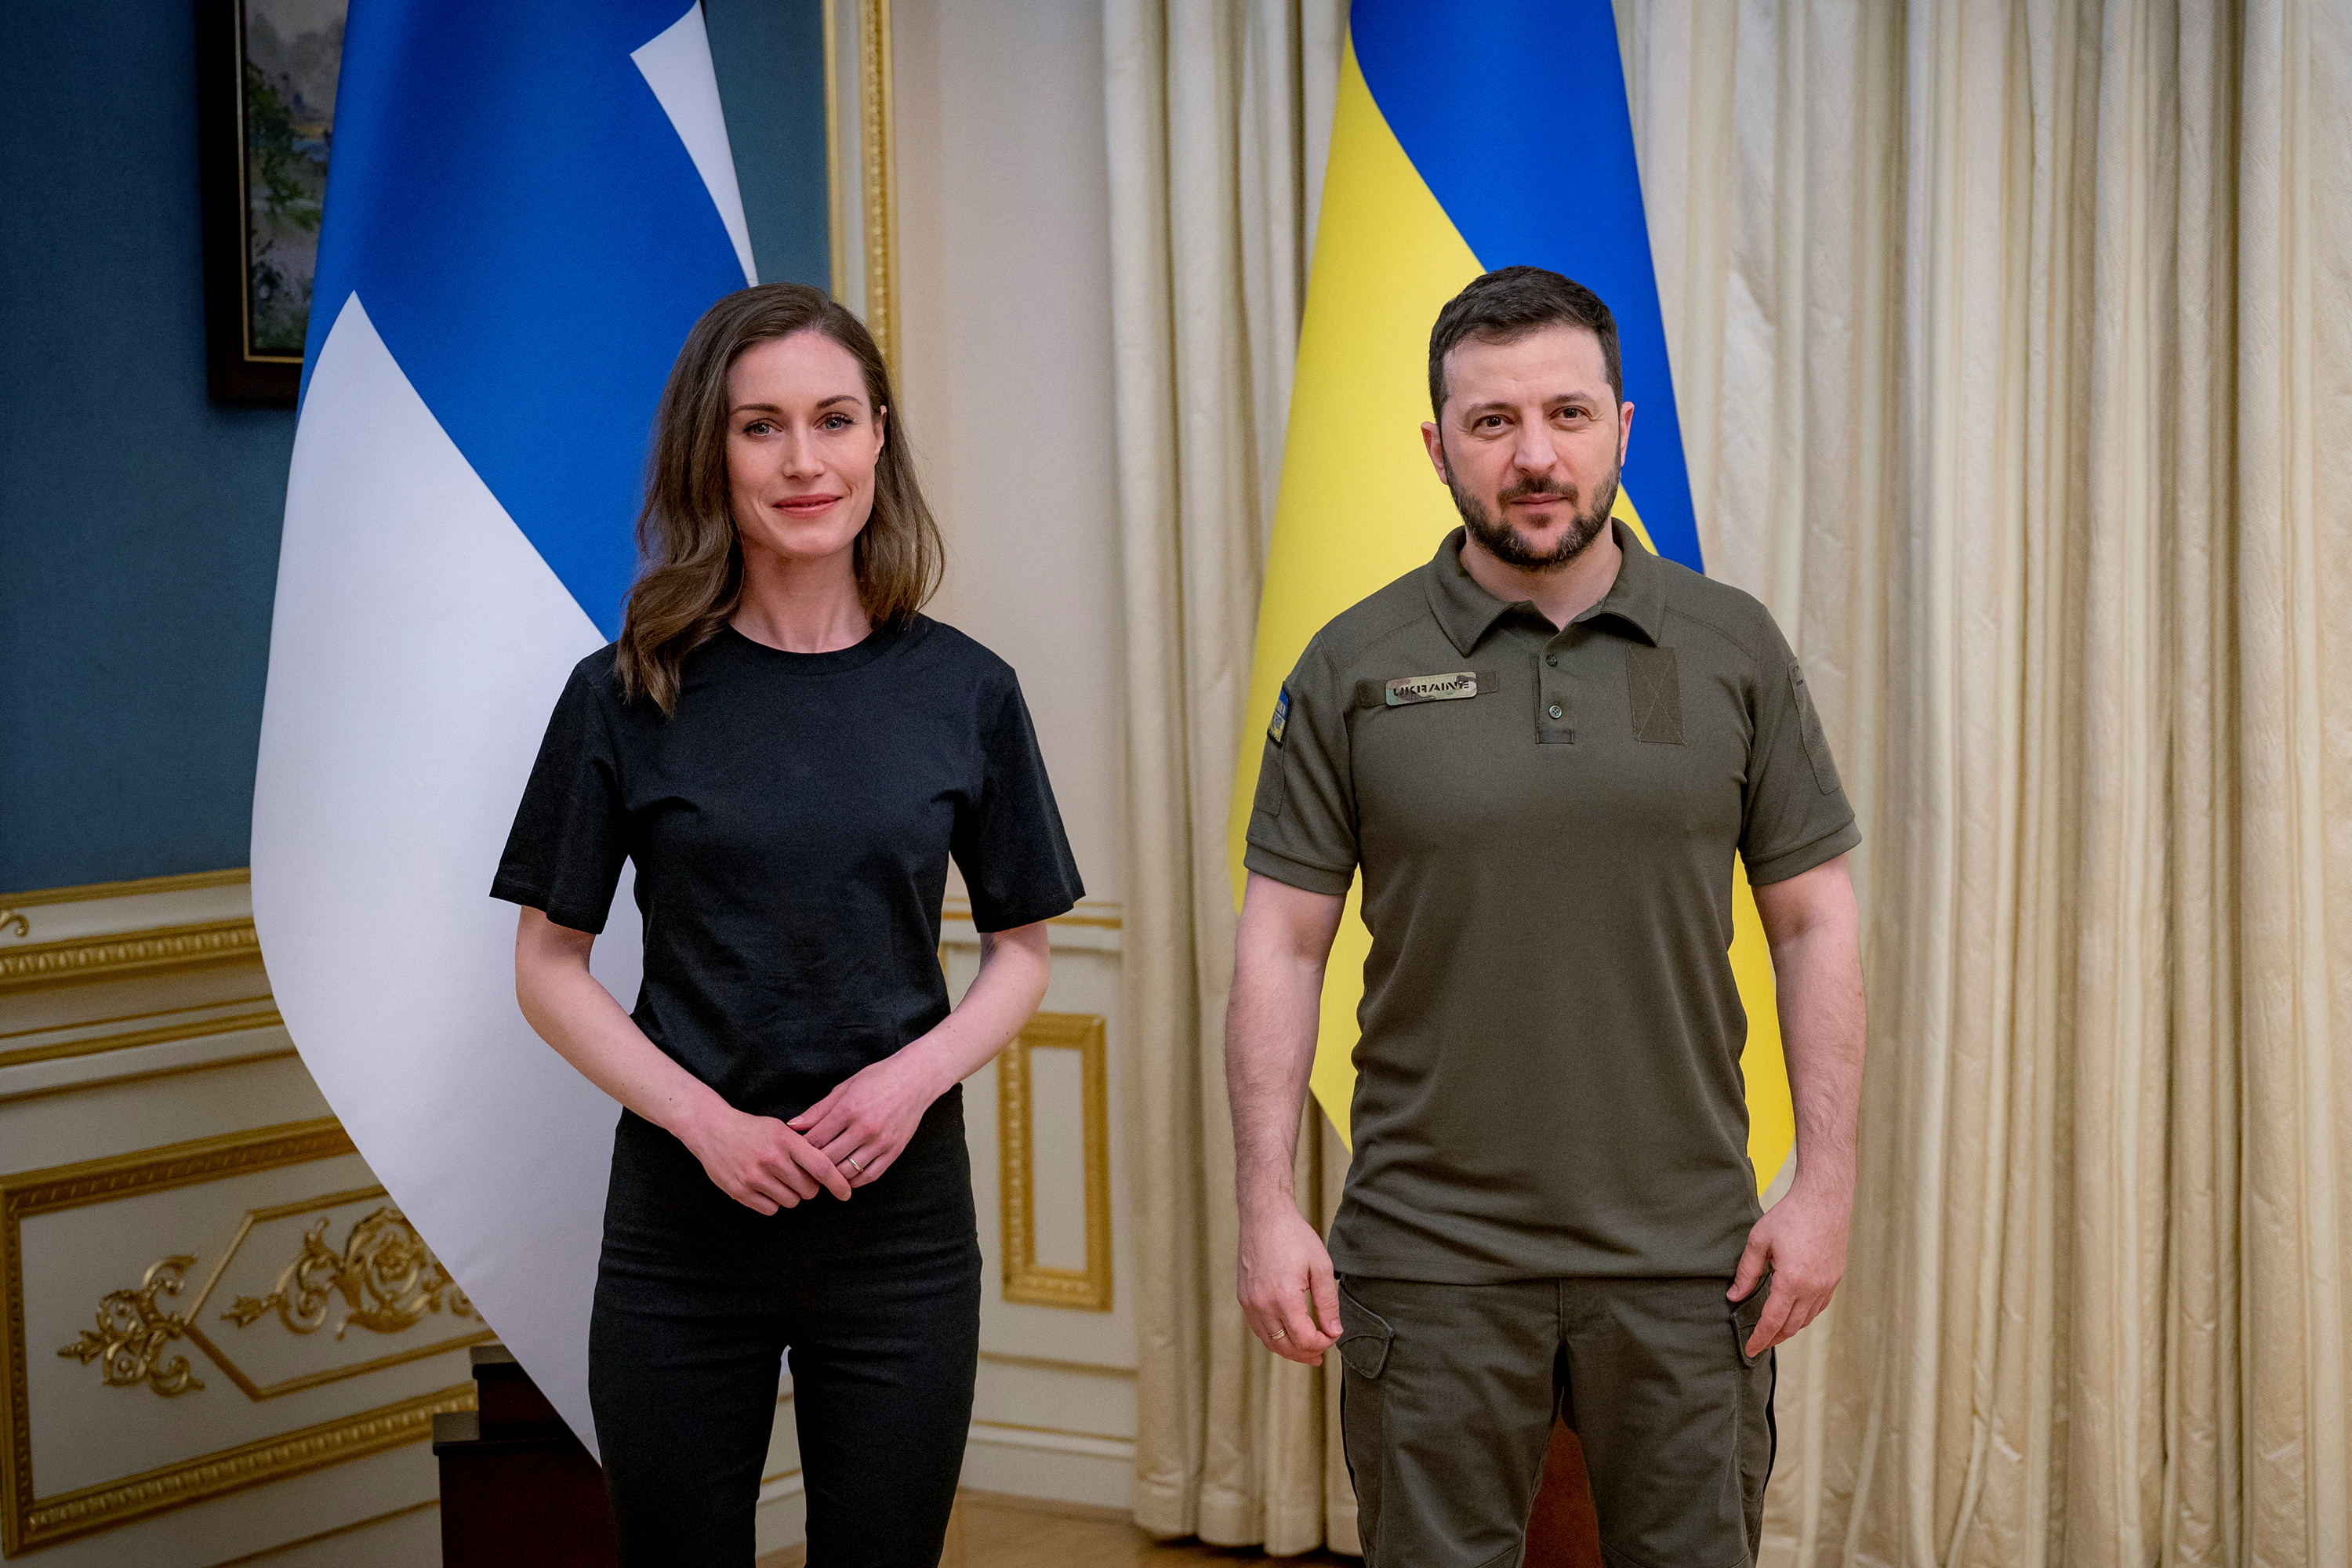 La primera ministra de Finlandia Sanna Marin visitó a Zelensky (Ukrainian Presidential Press Service/Handout via REUTERS)